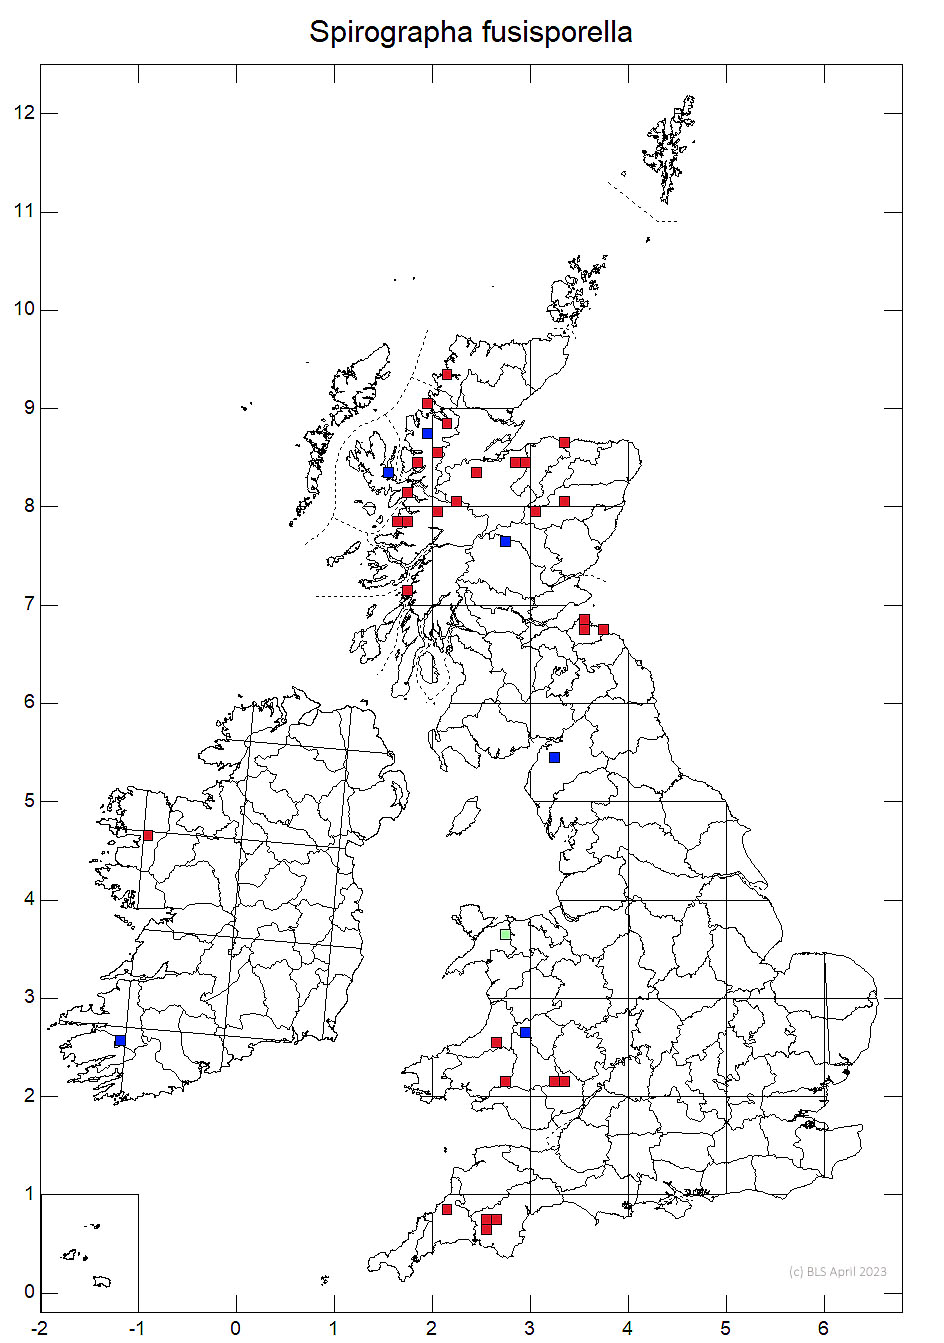 Spirographa fusisporella 10km sq distribution map